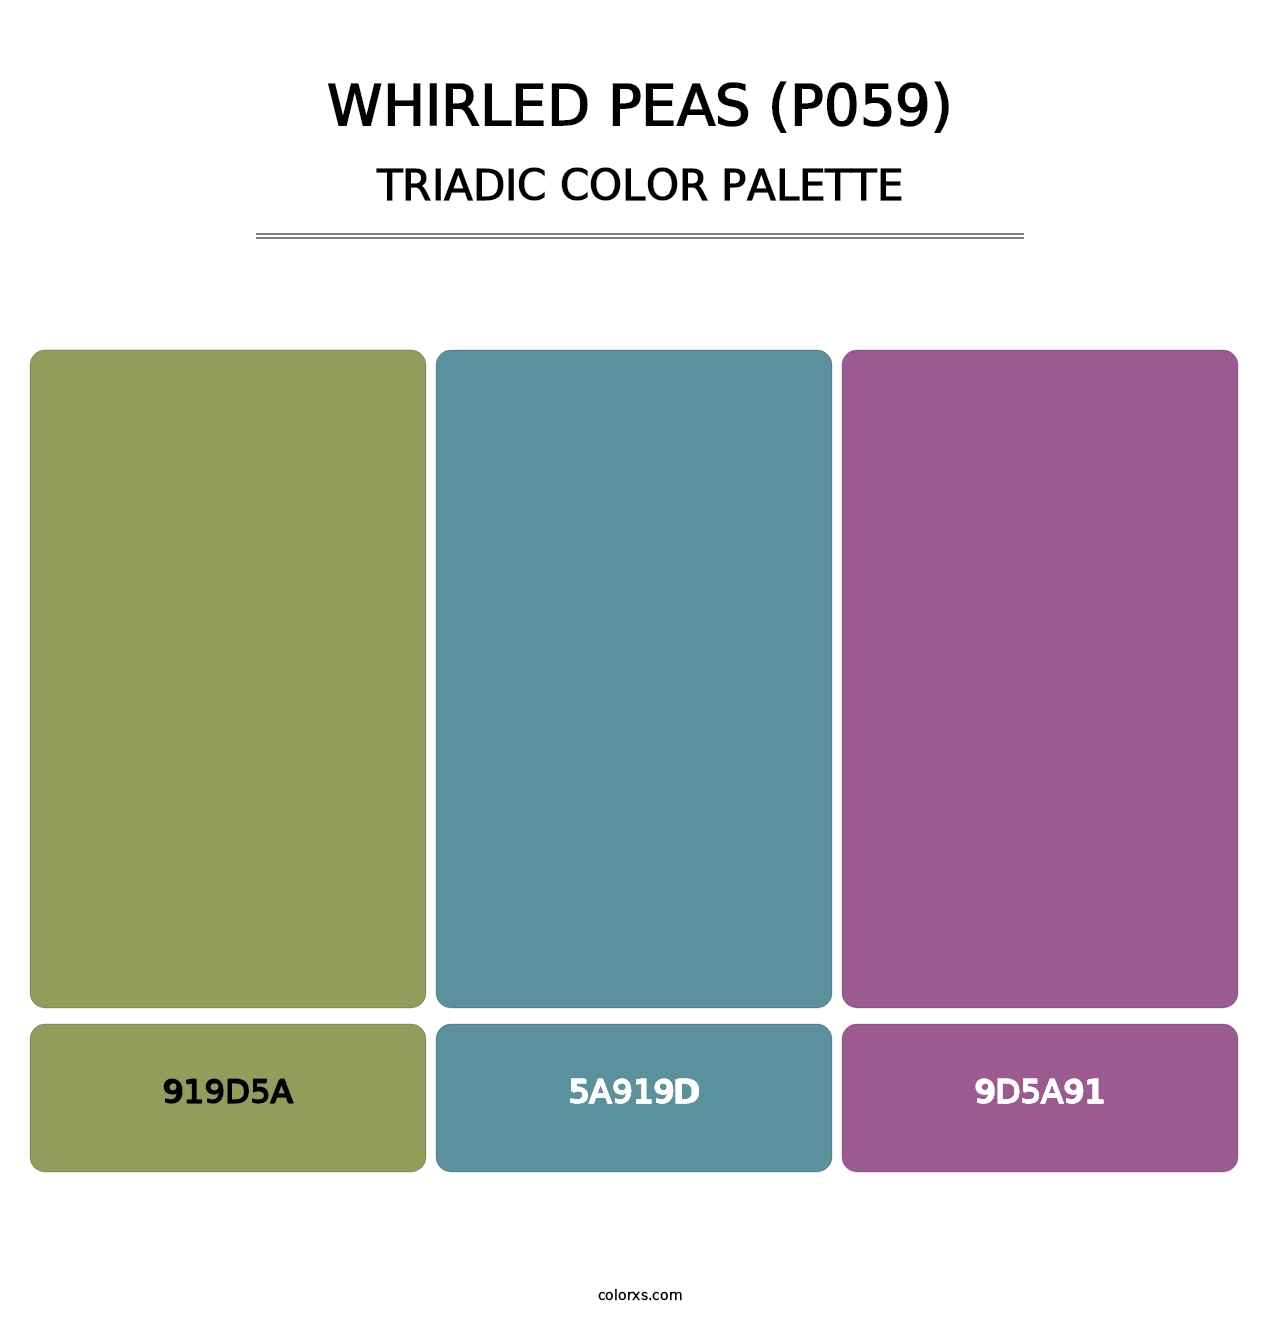 Whirled Peas (P059) - Triadic Color Palette